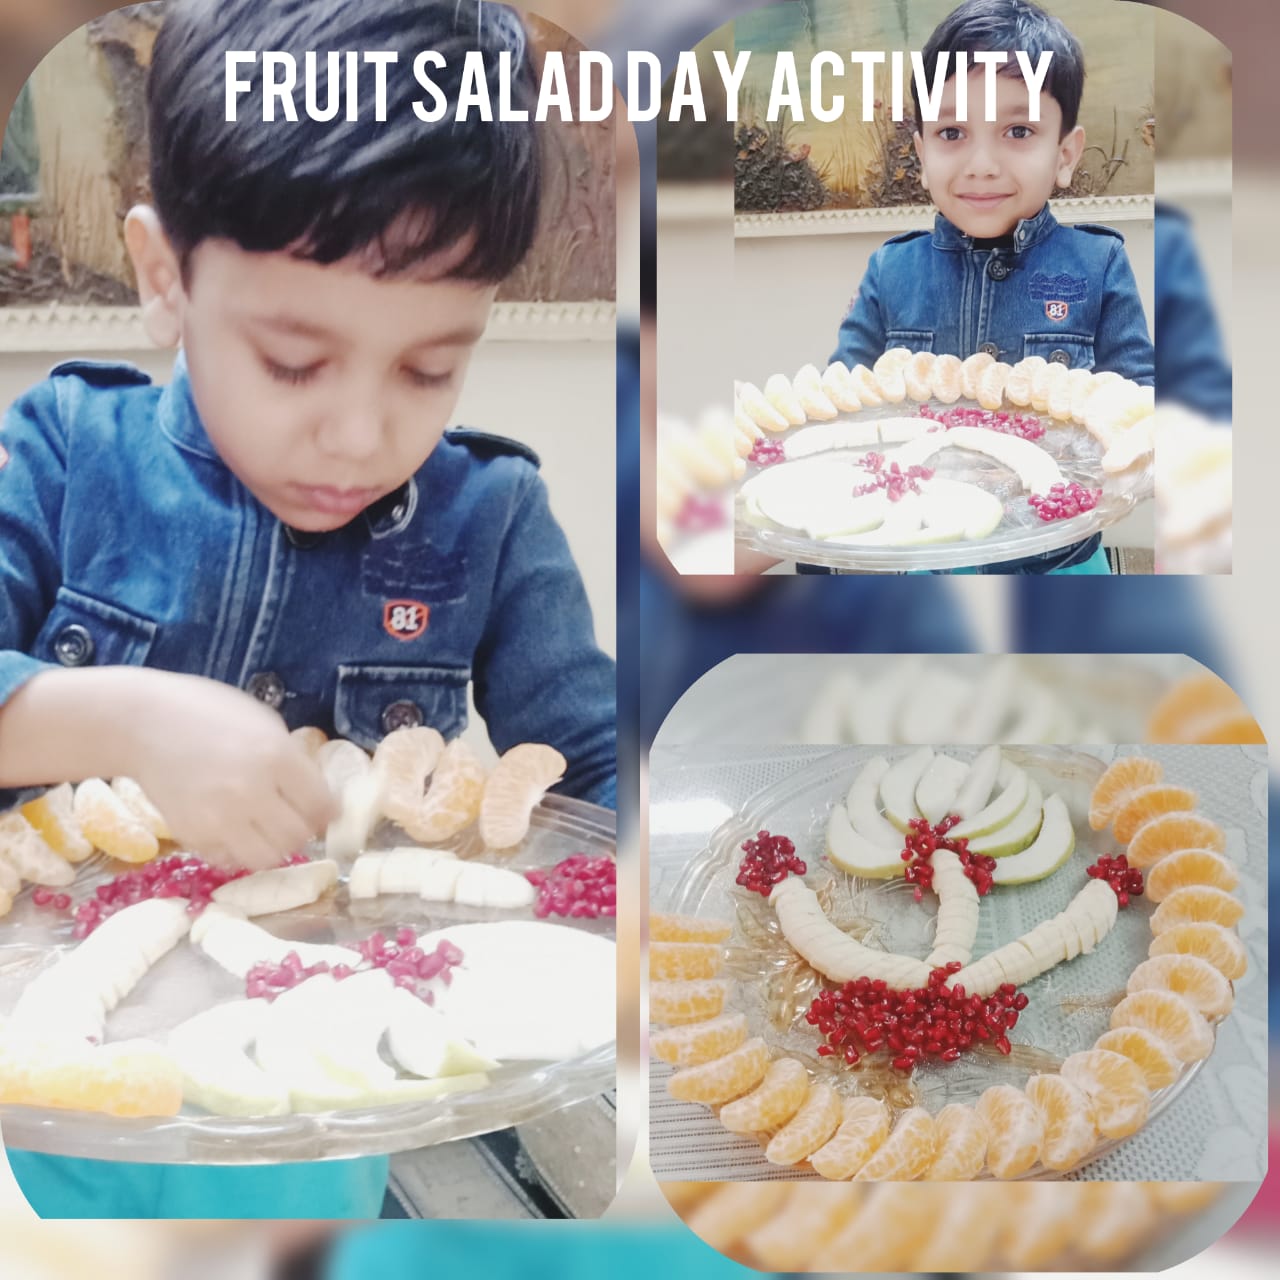 FRUIT SALAD ACTIVITY